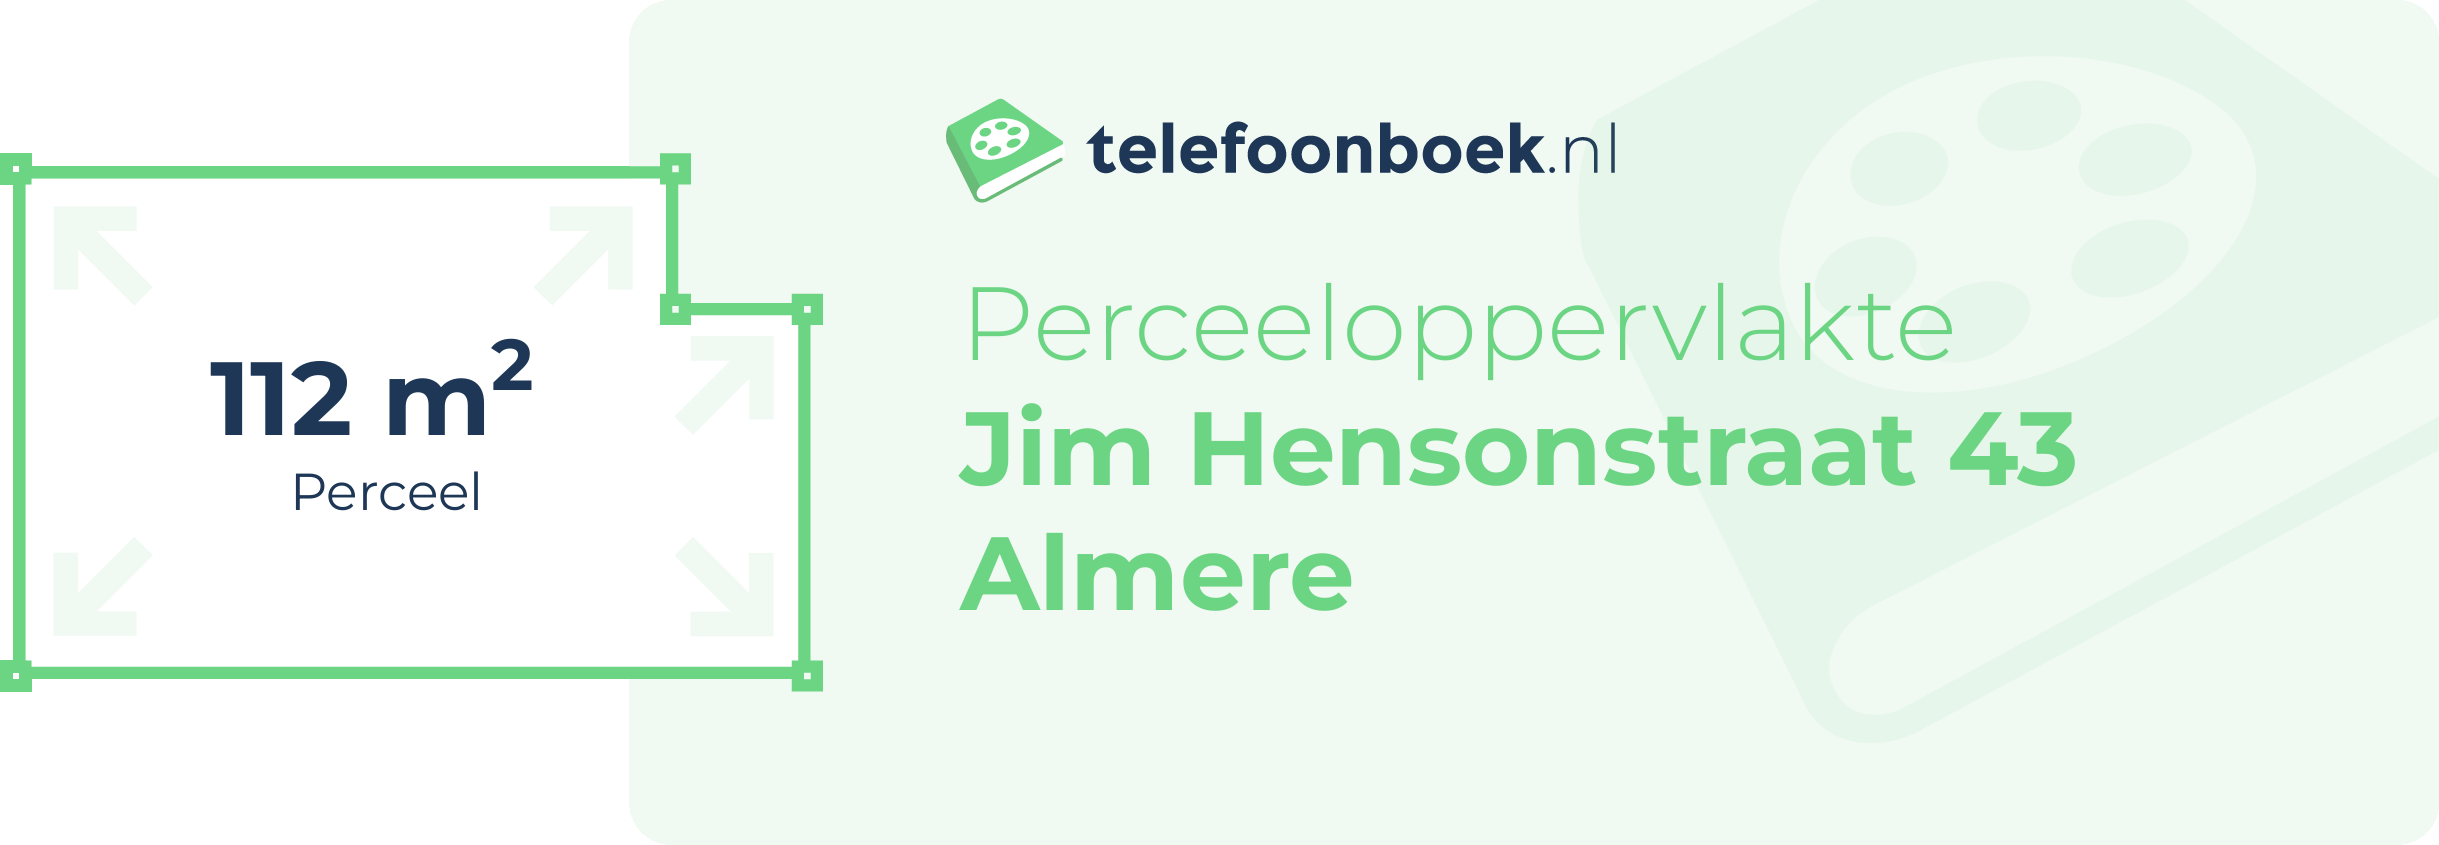 Perceeloppervlakte Jim Hensonstraat 43 Almere